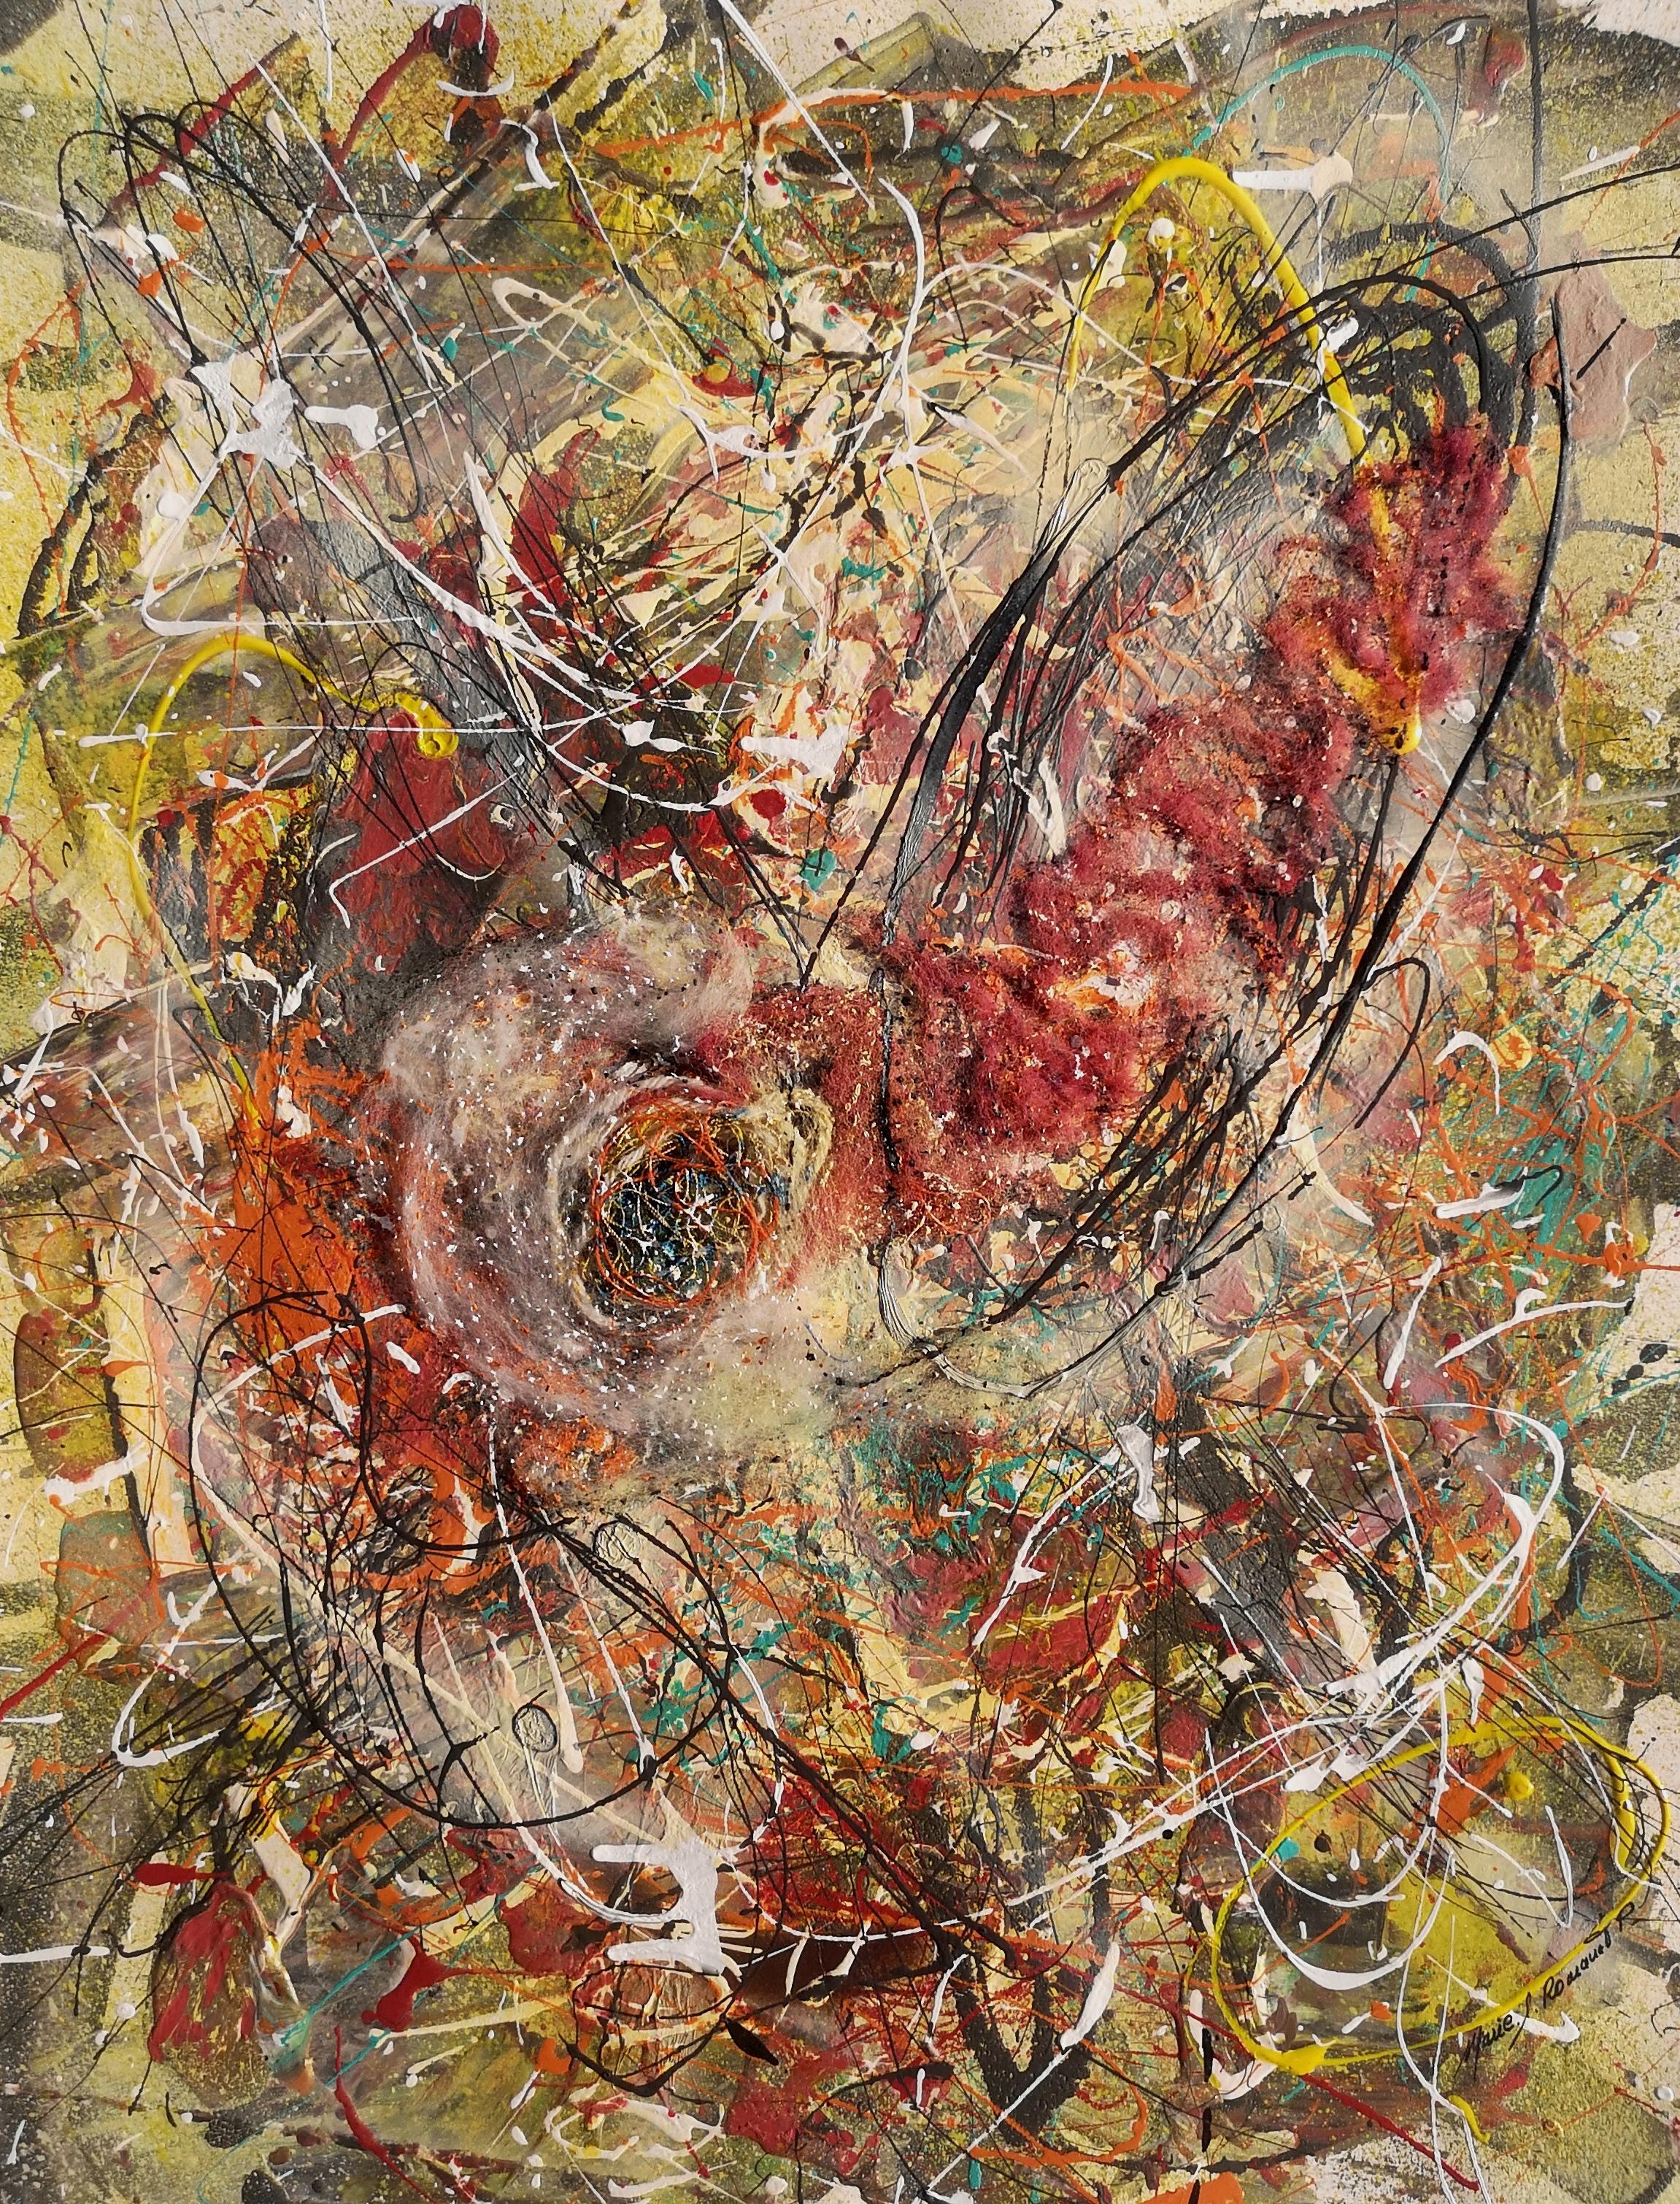 "L'ETRE NOUVEAU"  Pollock style - Mixed Media Art by Marie-Laure Romanet Prin company